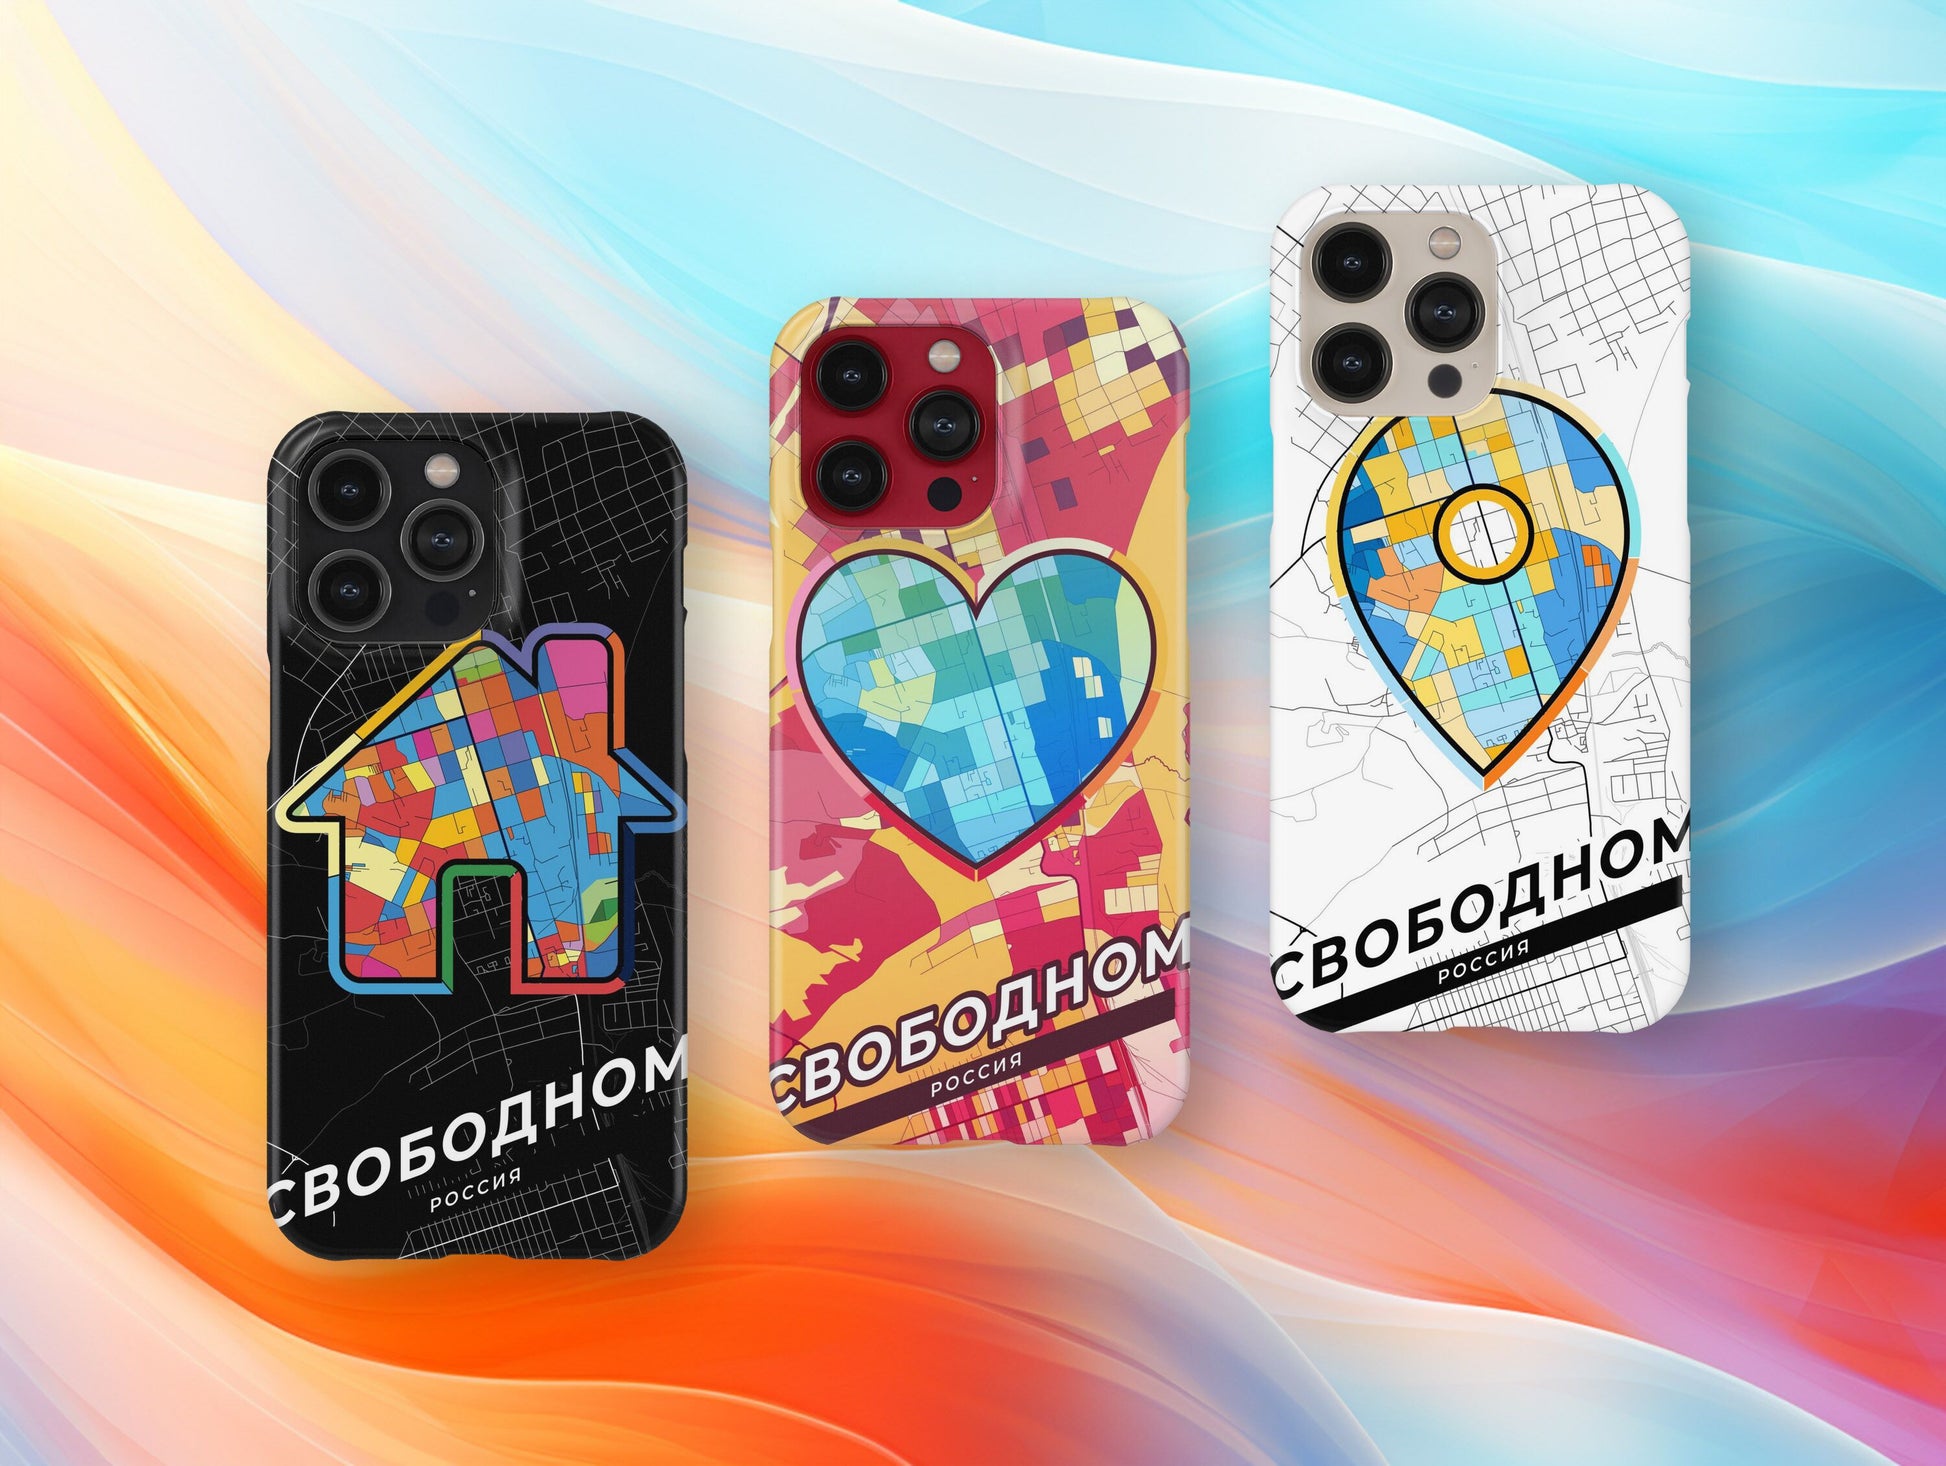 Svobodny Russia slim phone case with colorful icon